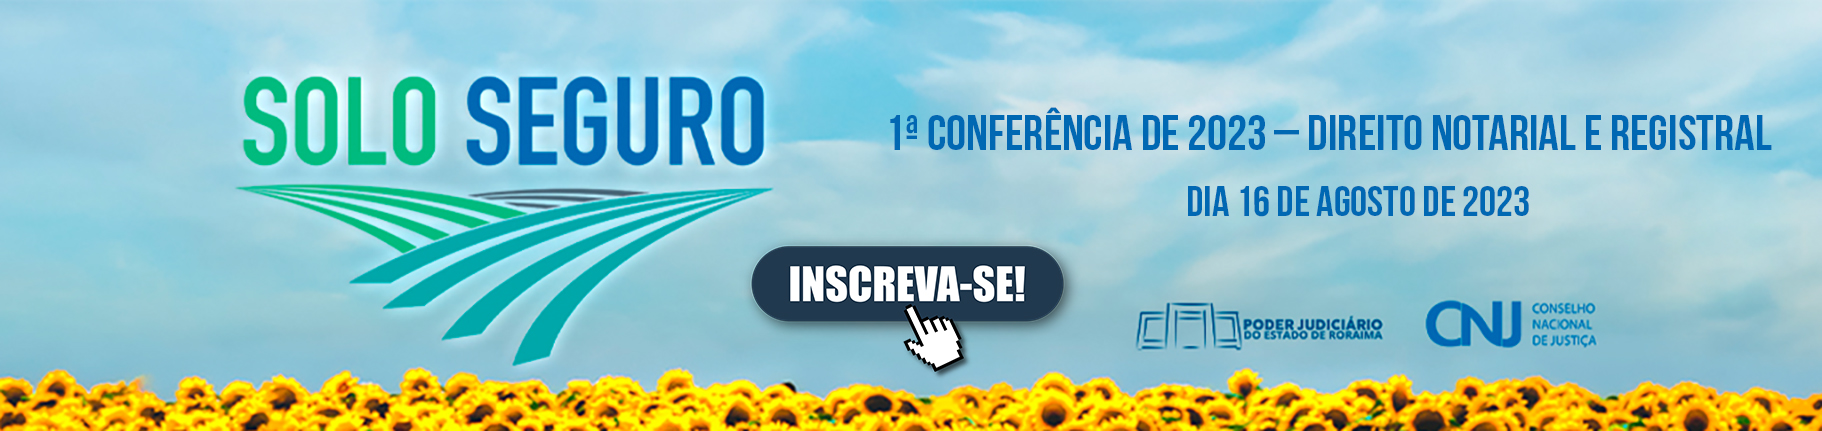 SOLO SEGURO - TJRR promove a 1ª Conferência de Direito Notarial e